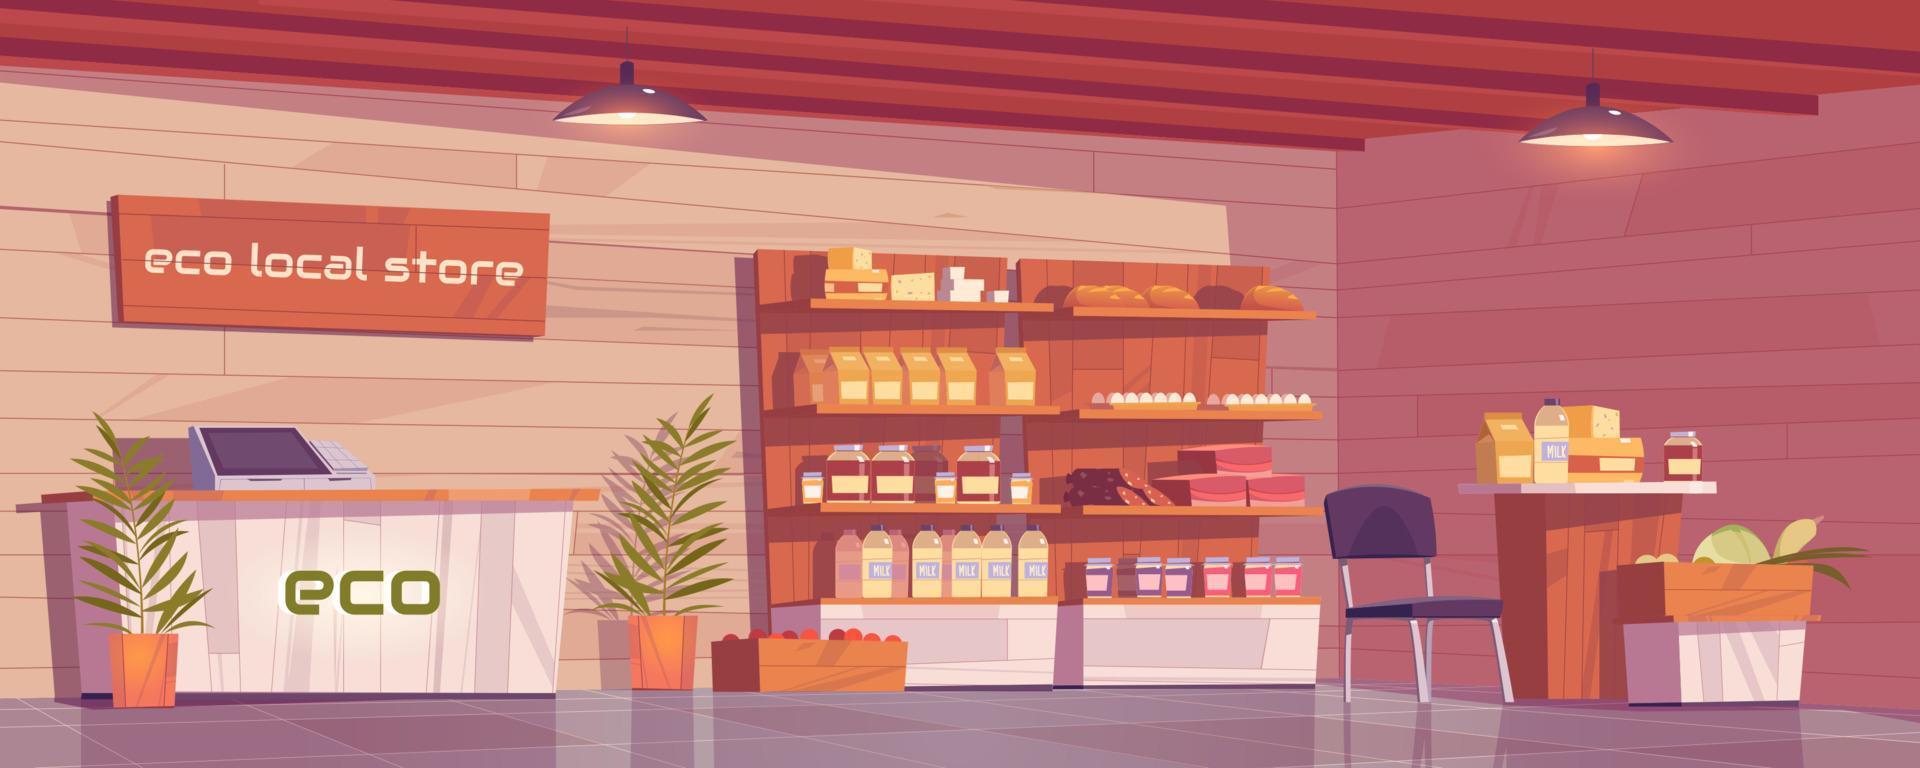 Local eco store empty interior, grocery shop. vector